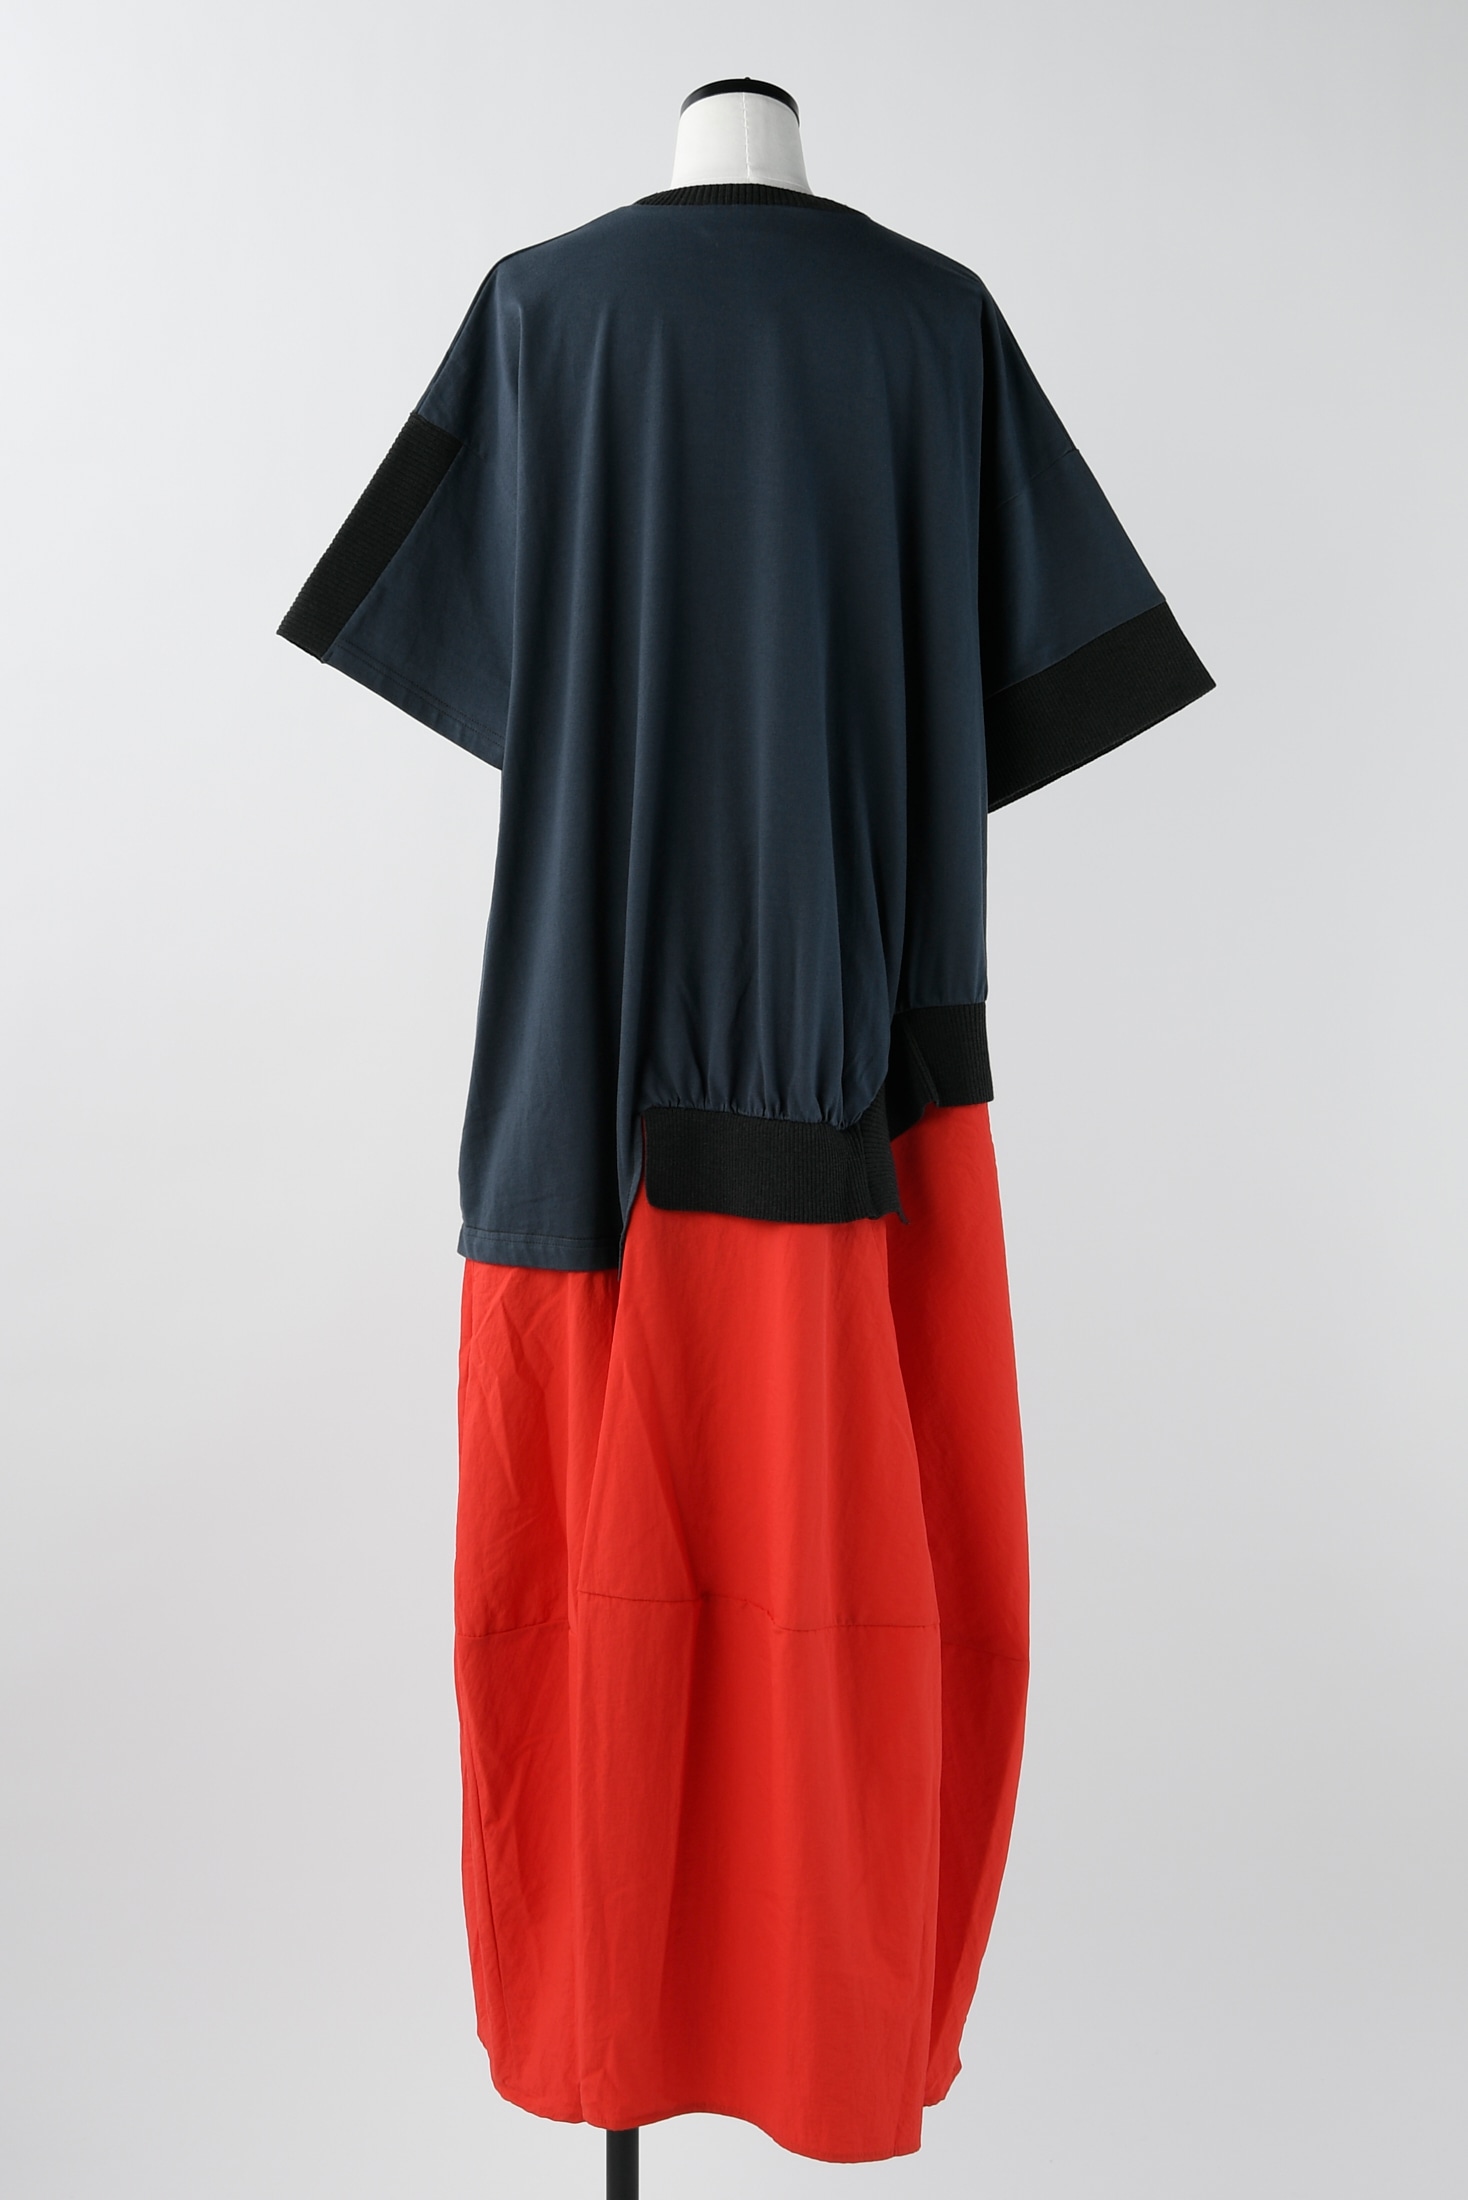 nagonstans layered combination dress